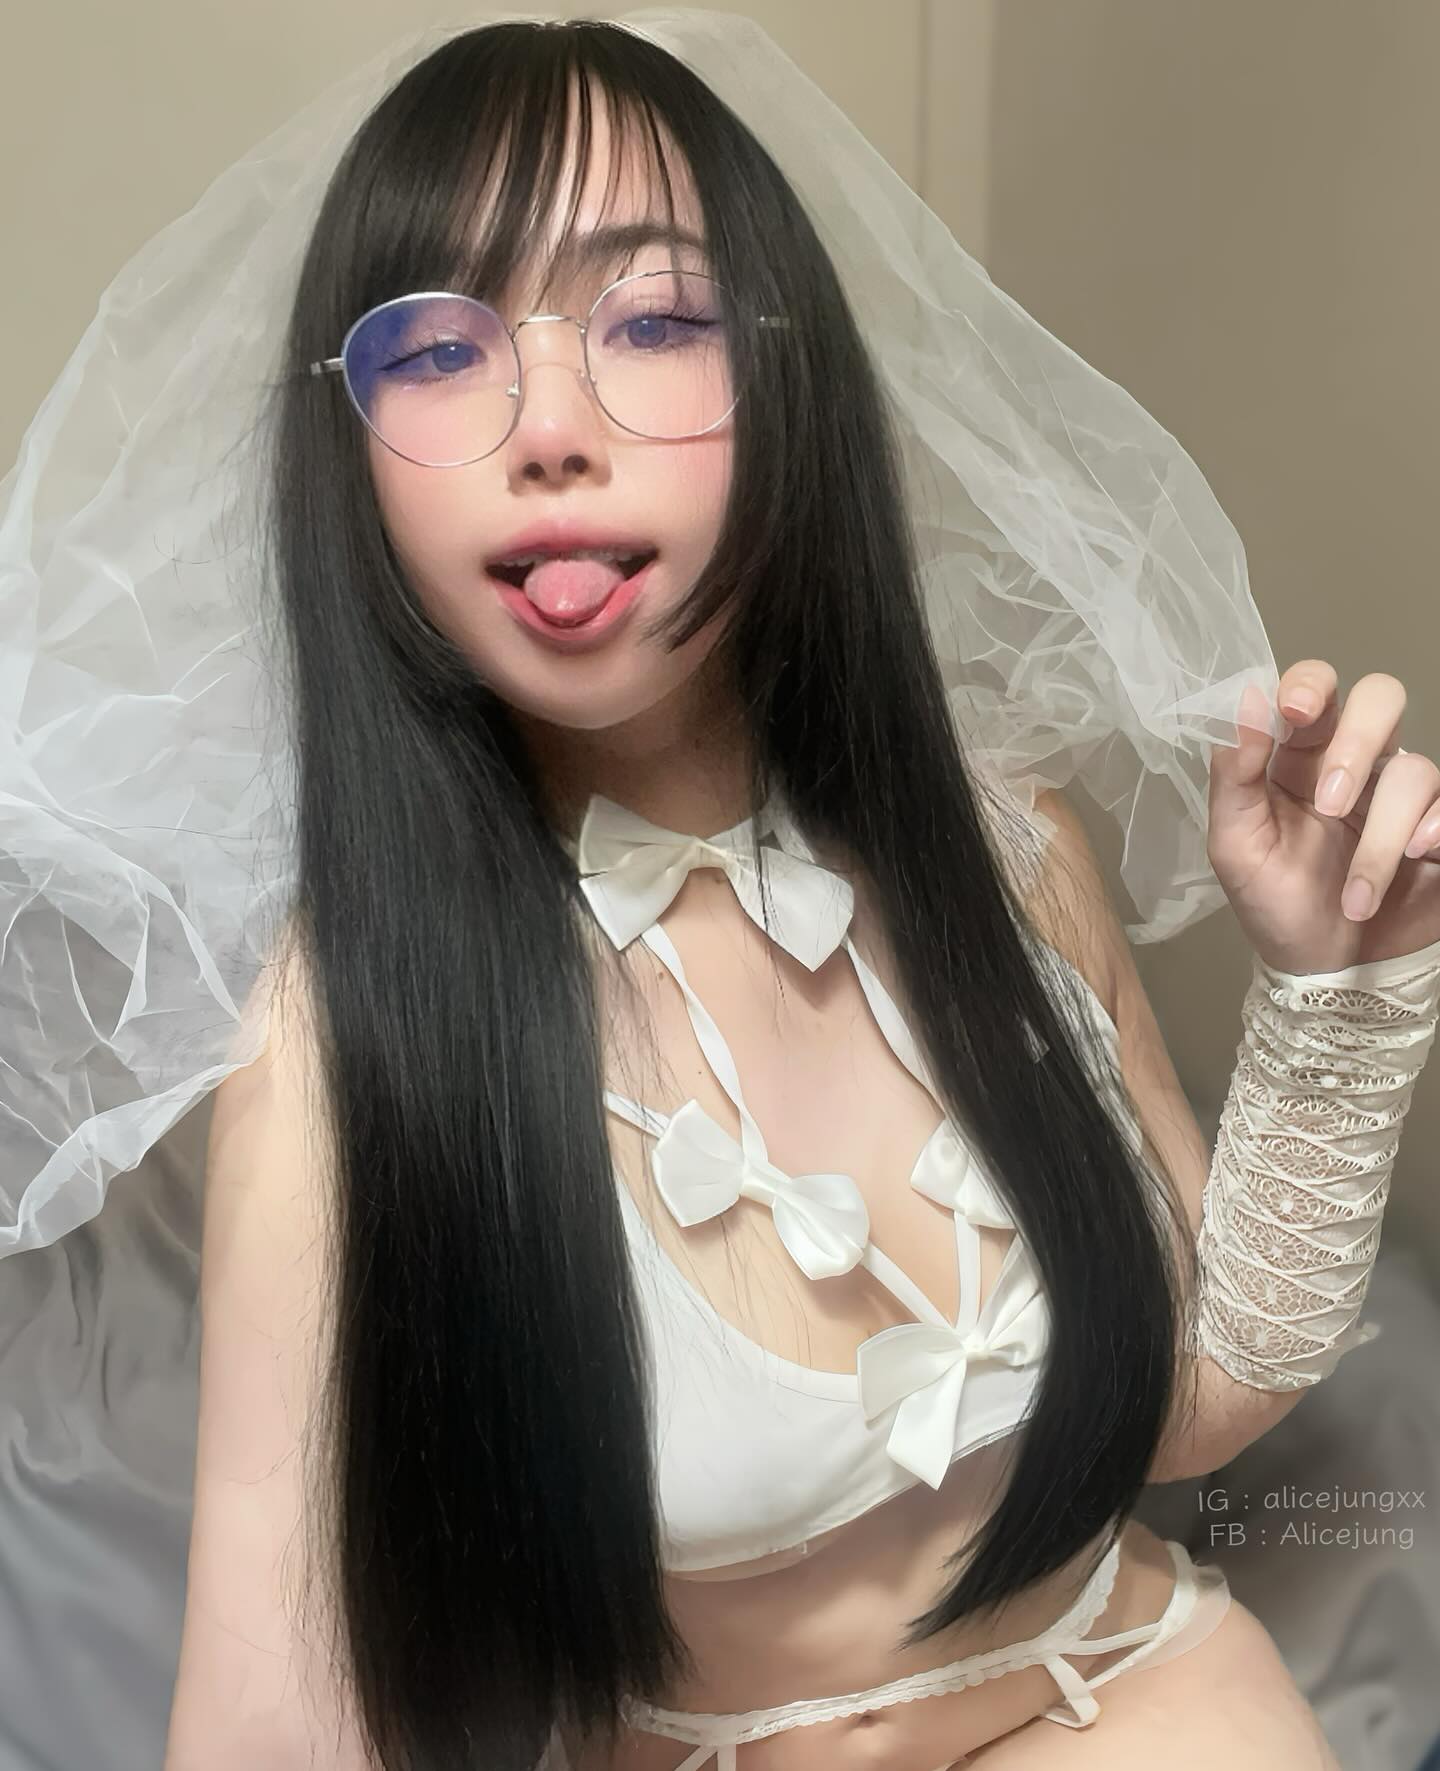 👰🏻‍♀️💍

🎀
…………
#bride #glasses #cute #kawaiigirl #style